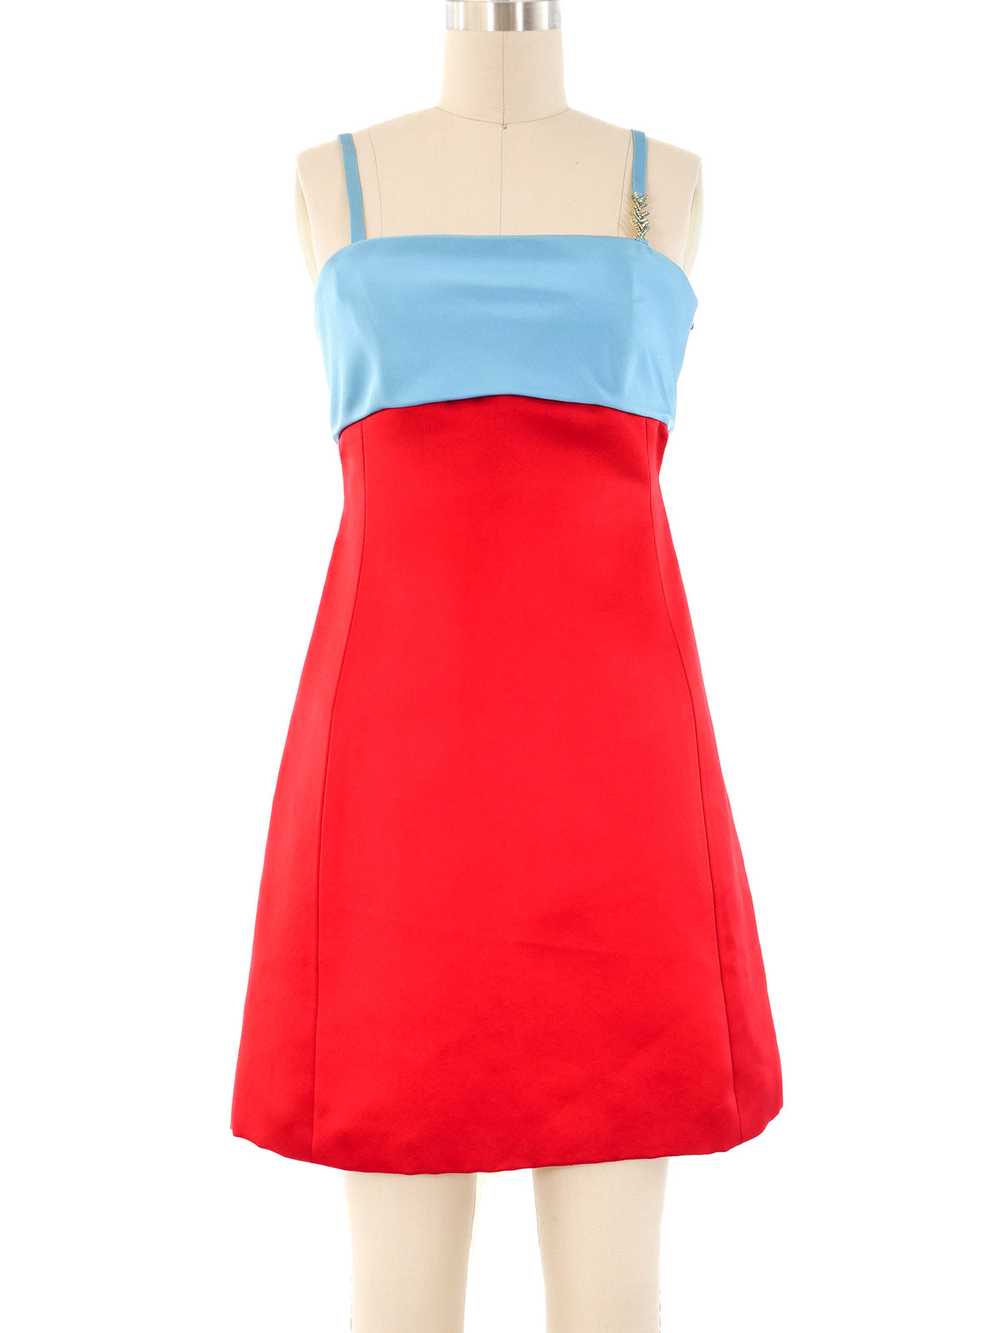 Gianni Versace Colorblock Satin Mini Dress - image 1